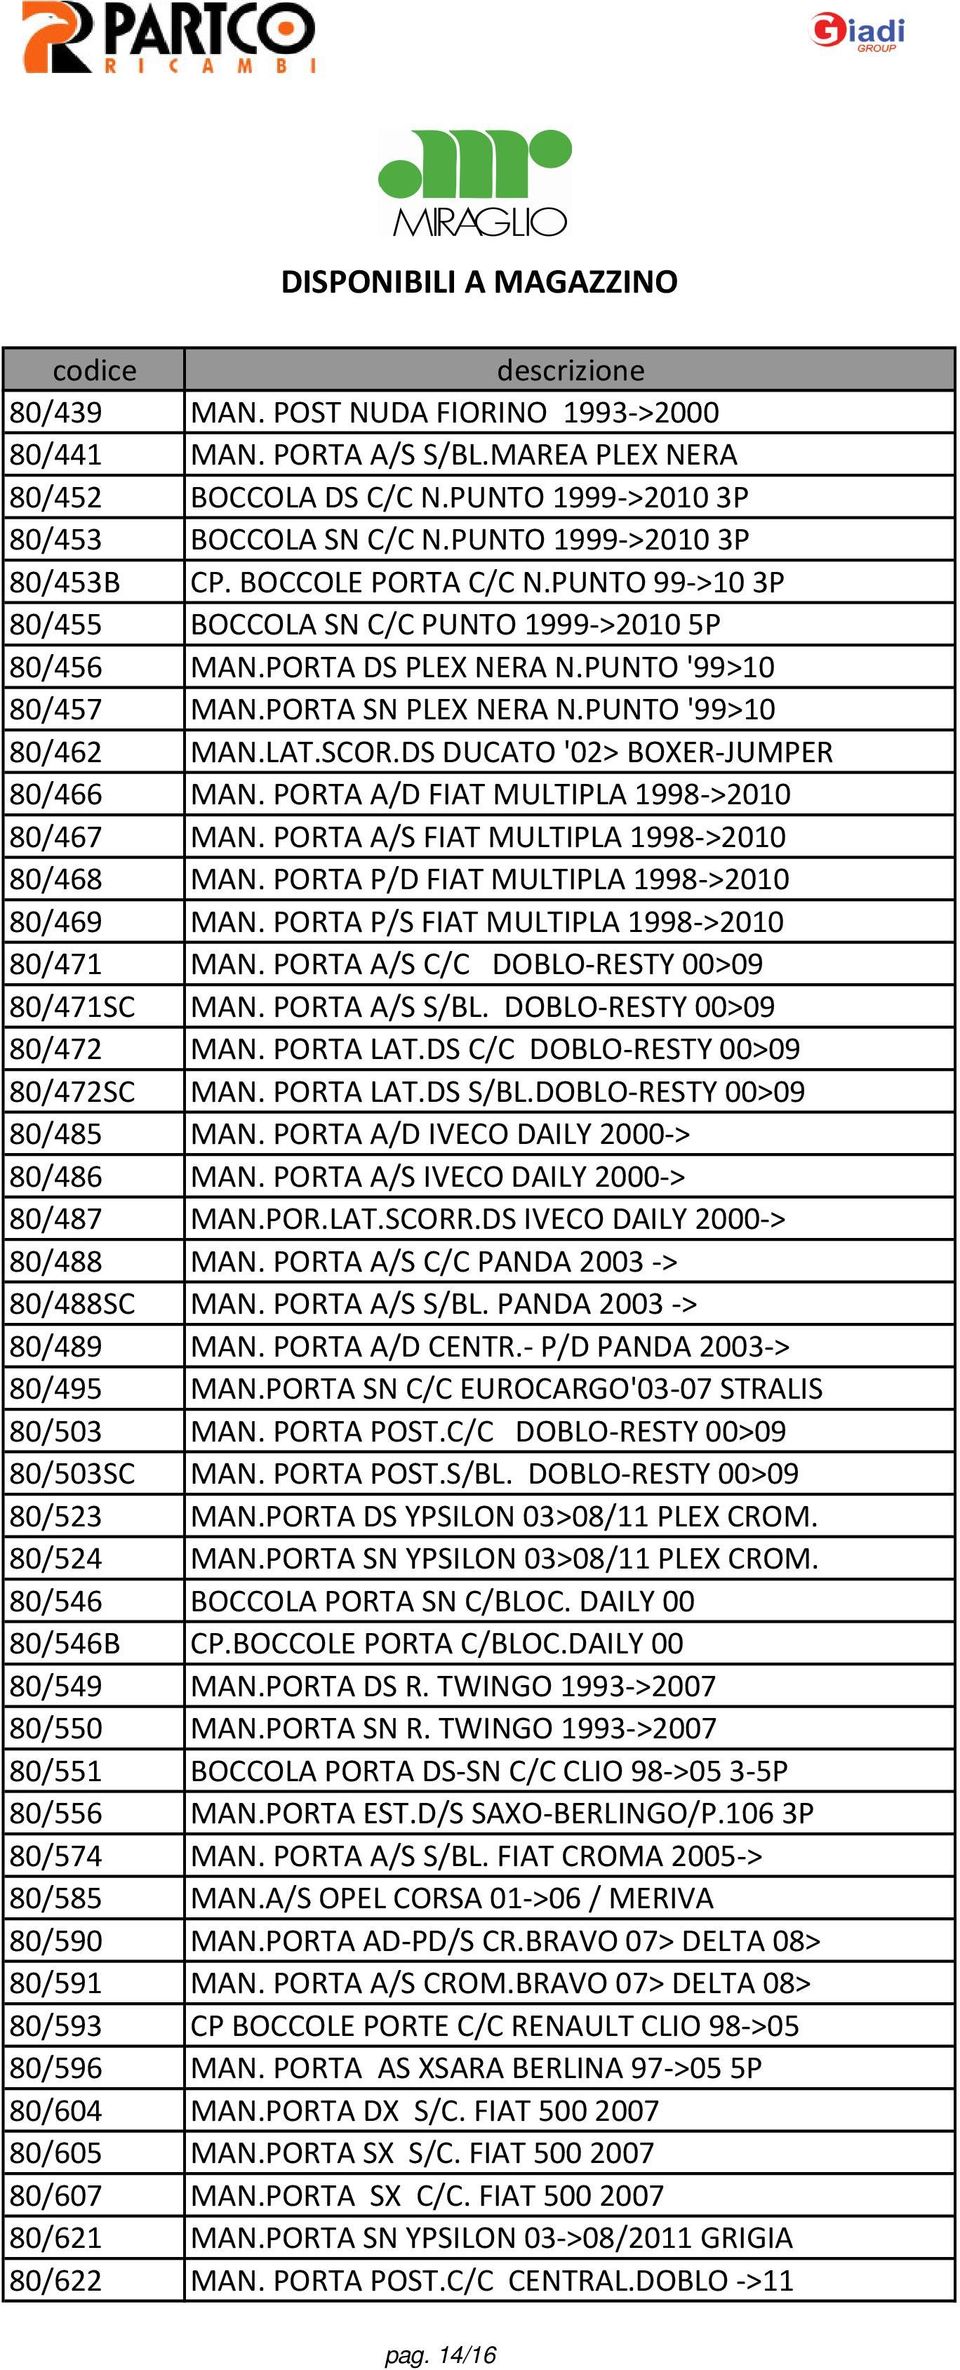 DS DUCATO '02> BOXER-JUMPER 80/466 MAN. PORTA A/D FIAT MULTIPLA 1998->2010 80/467 MAN. PORTA A/S FIAT MULTIPLA 1998->2010 80/468 MAN. PORTA P/D FIAT MULTIPLA 1998->2010 80/469 MAN.